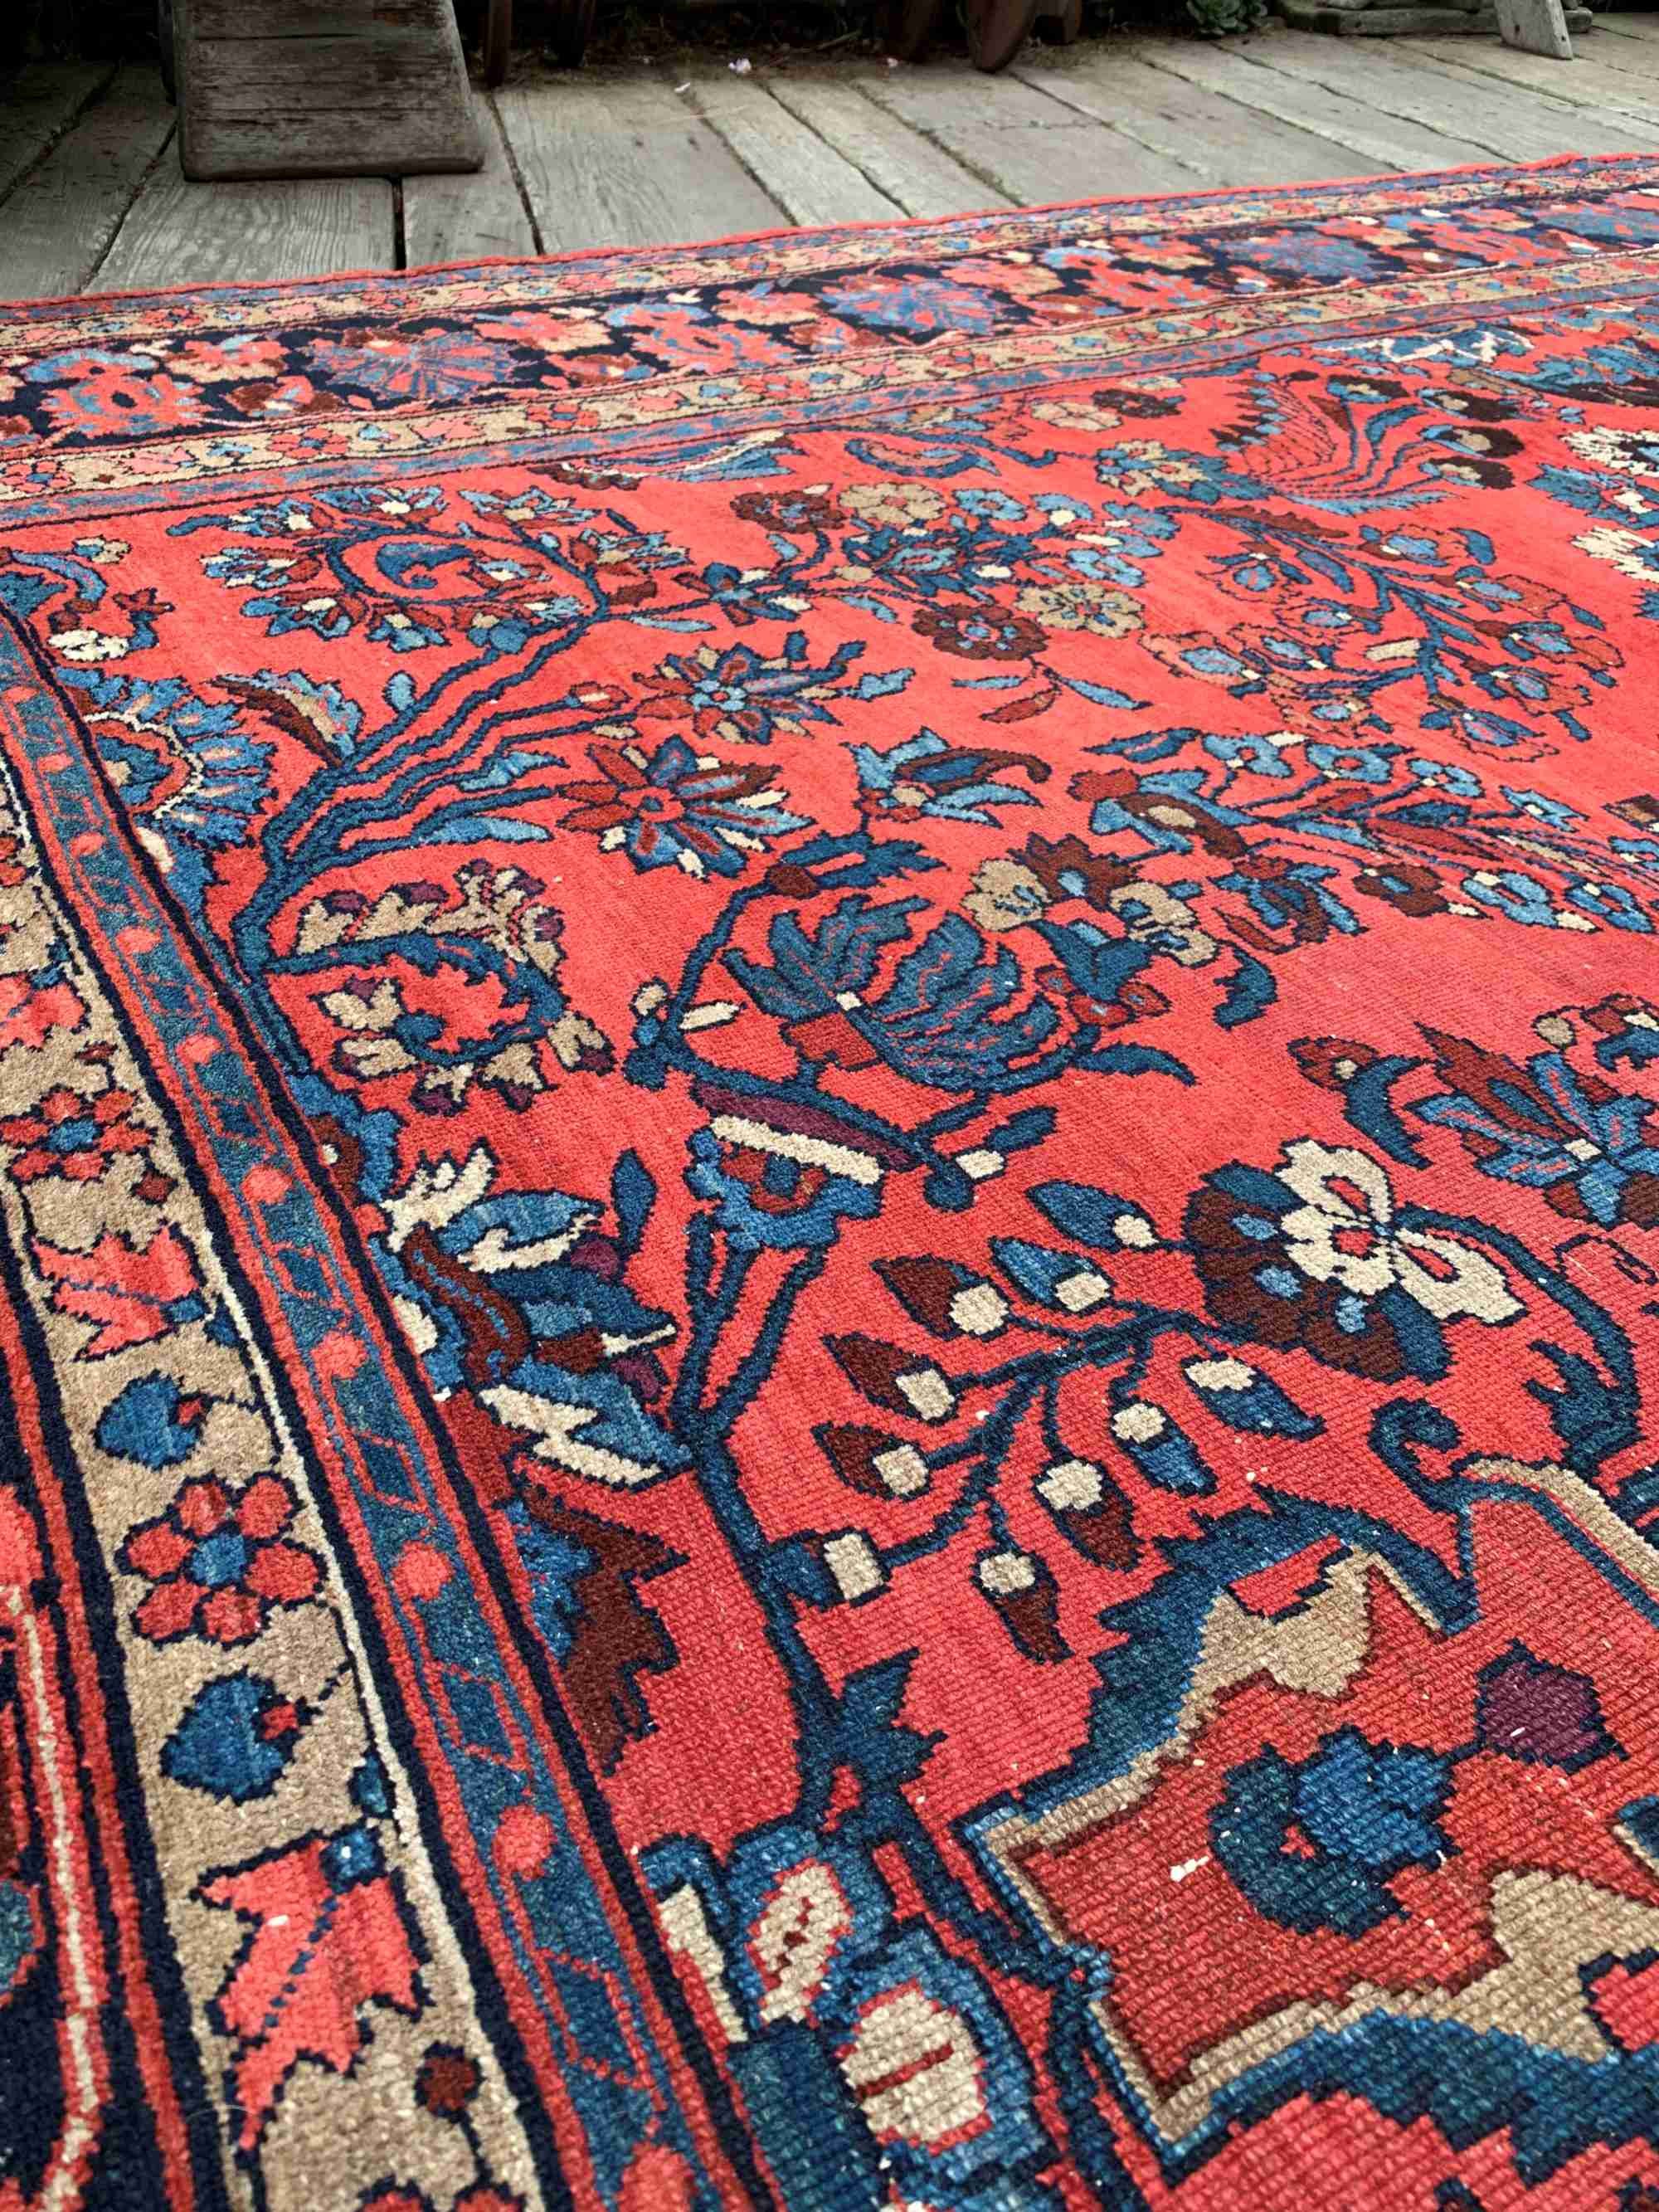 8'3 x 13' Antique Persian Berry Lilihan rug # 2236ML / 9x13 Vintage